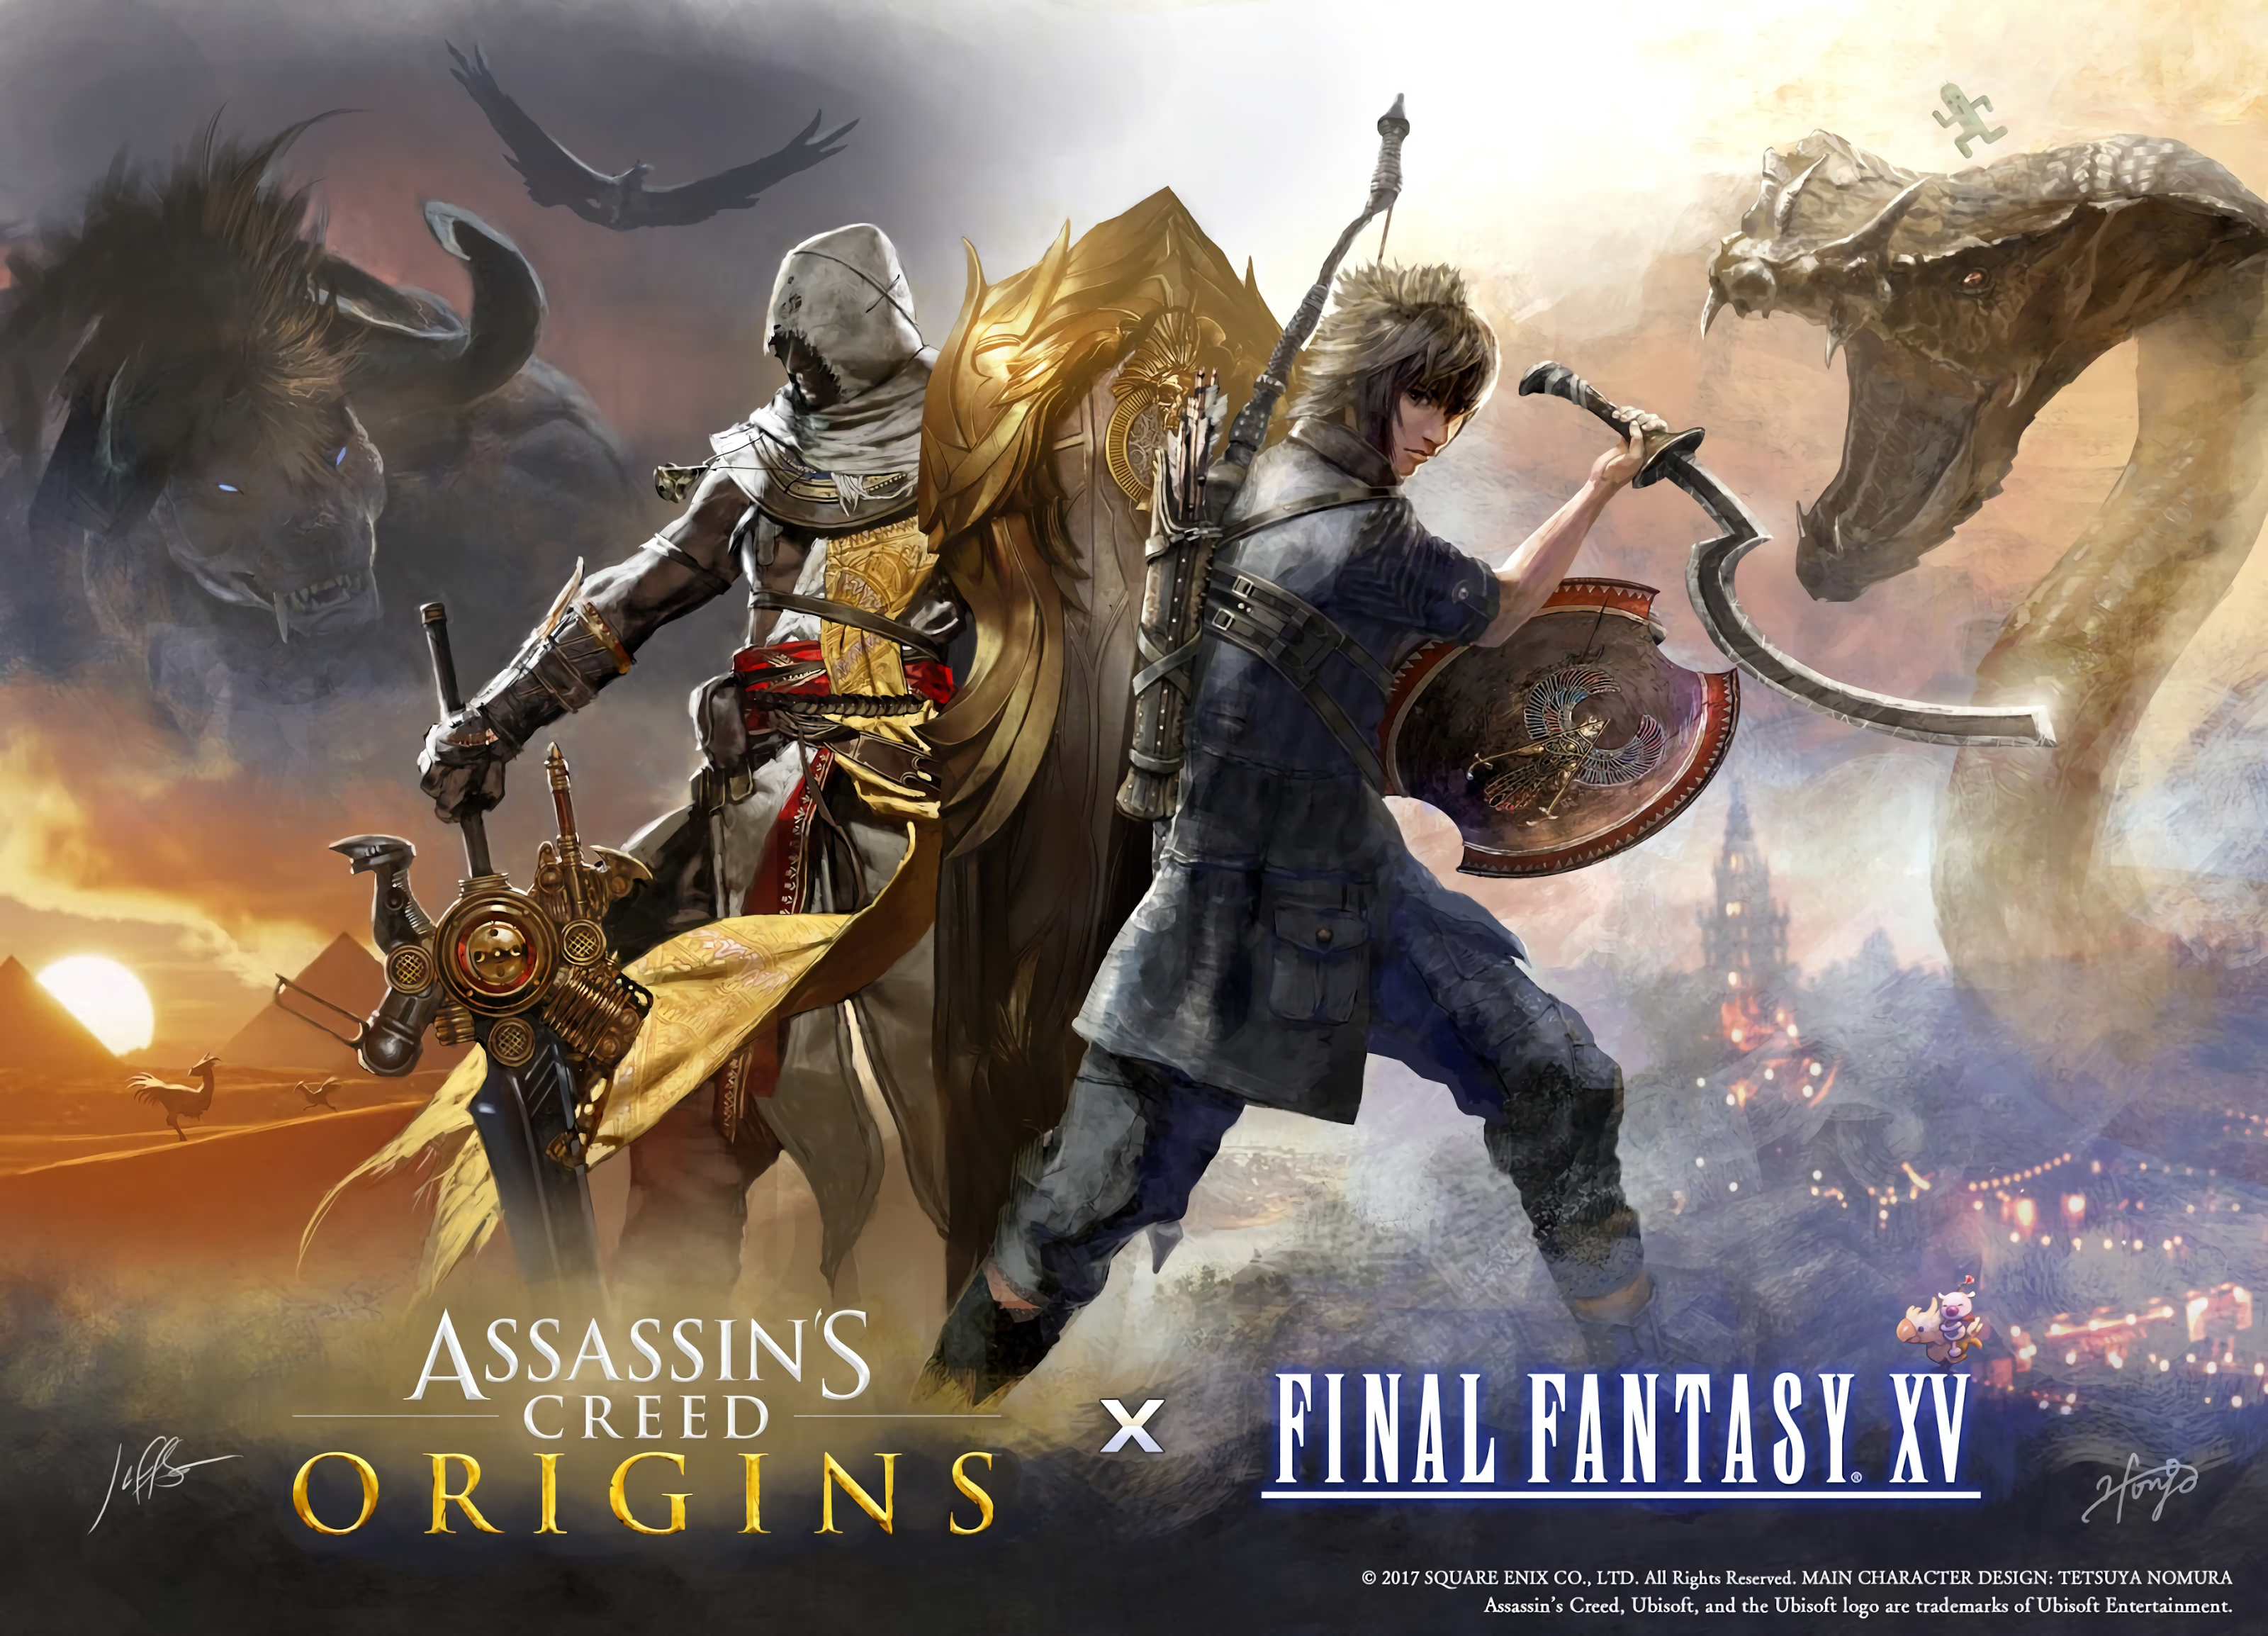 Assassin's Creed Origins x Final Fantasy XV,